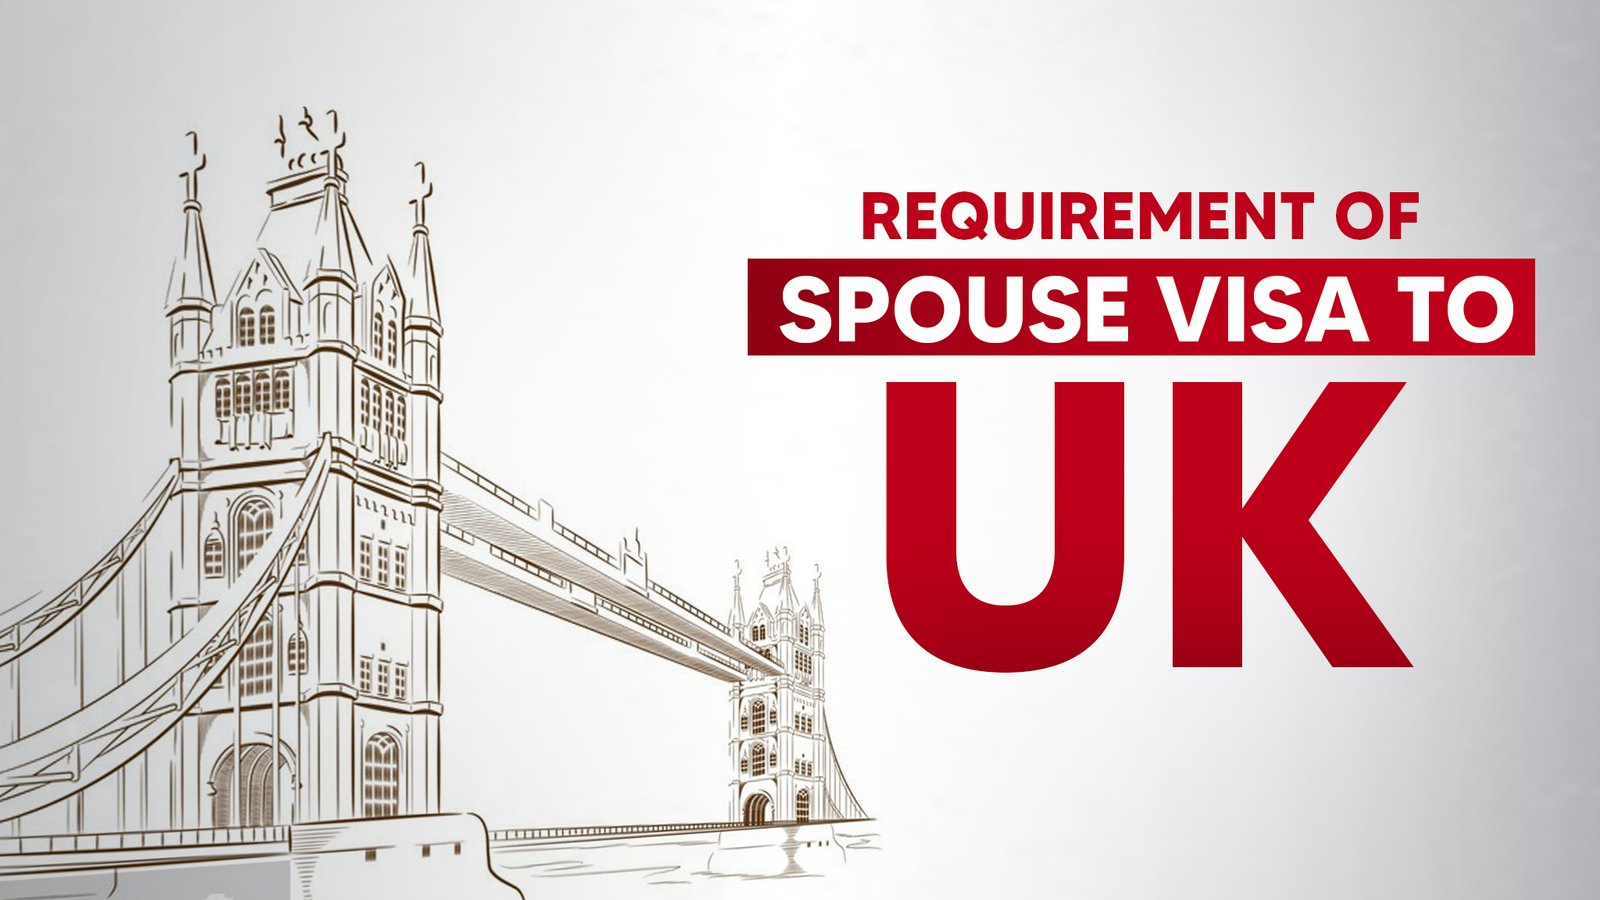 Spouse Visa To UK NFCI Global